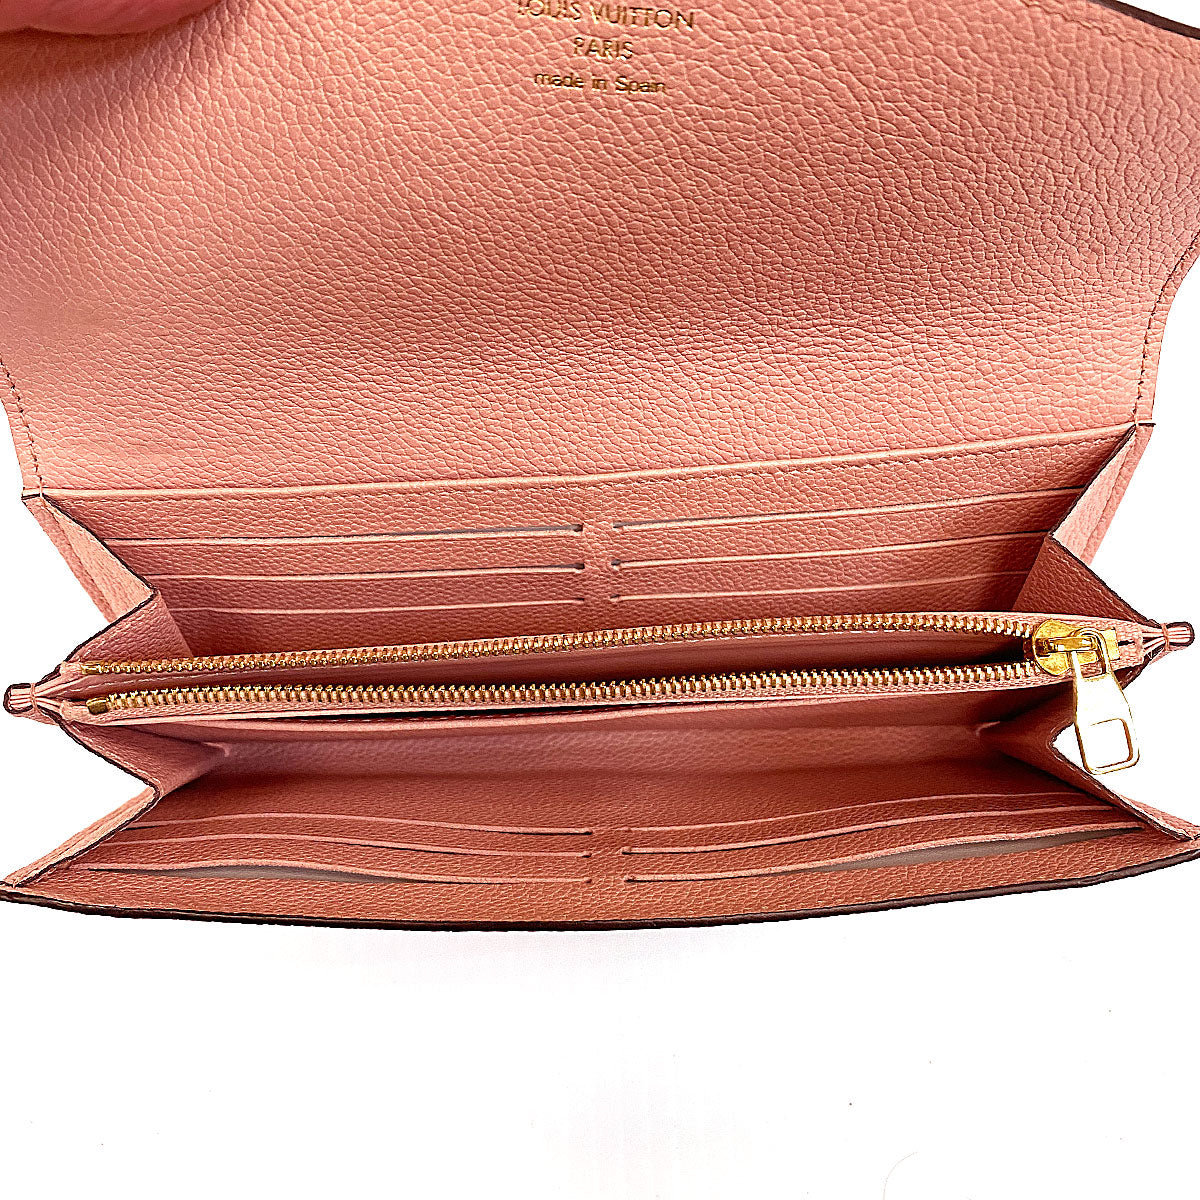 Louis Vuitton lv Sarah wallet monogram with pink interior